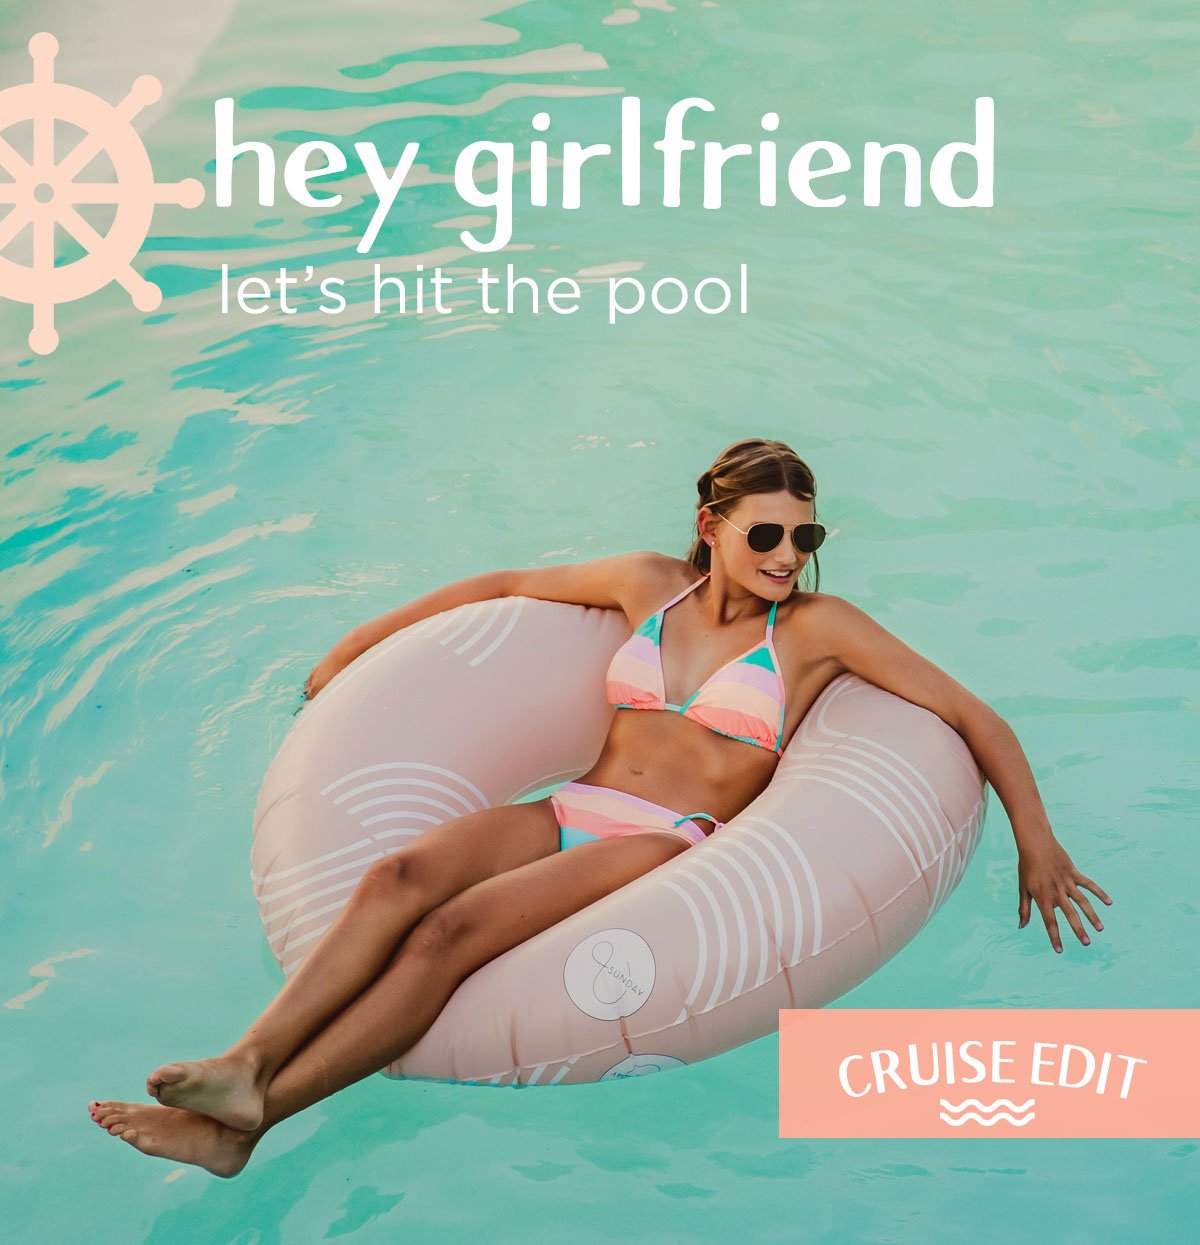 Hey girlfriend, let's hit the pool.